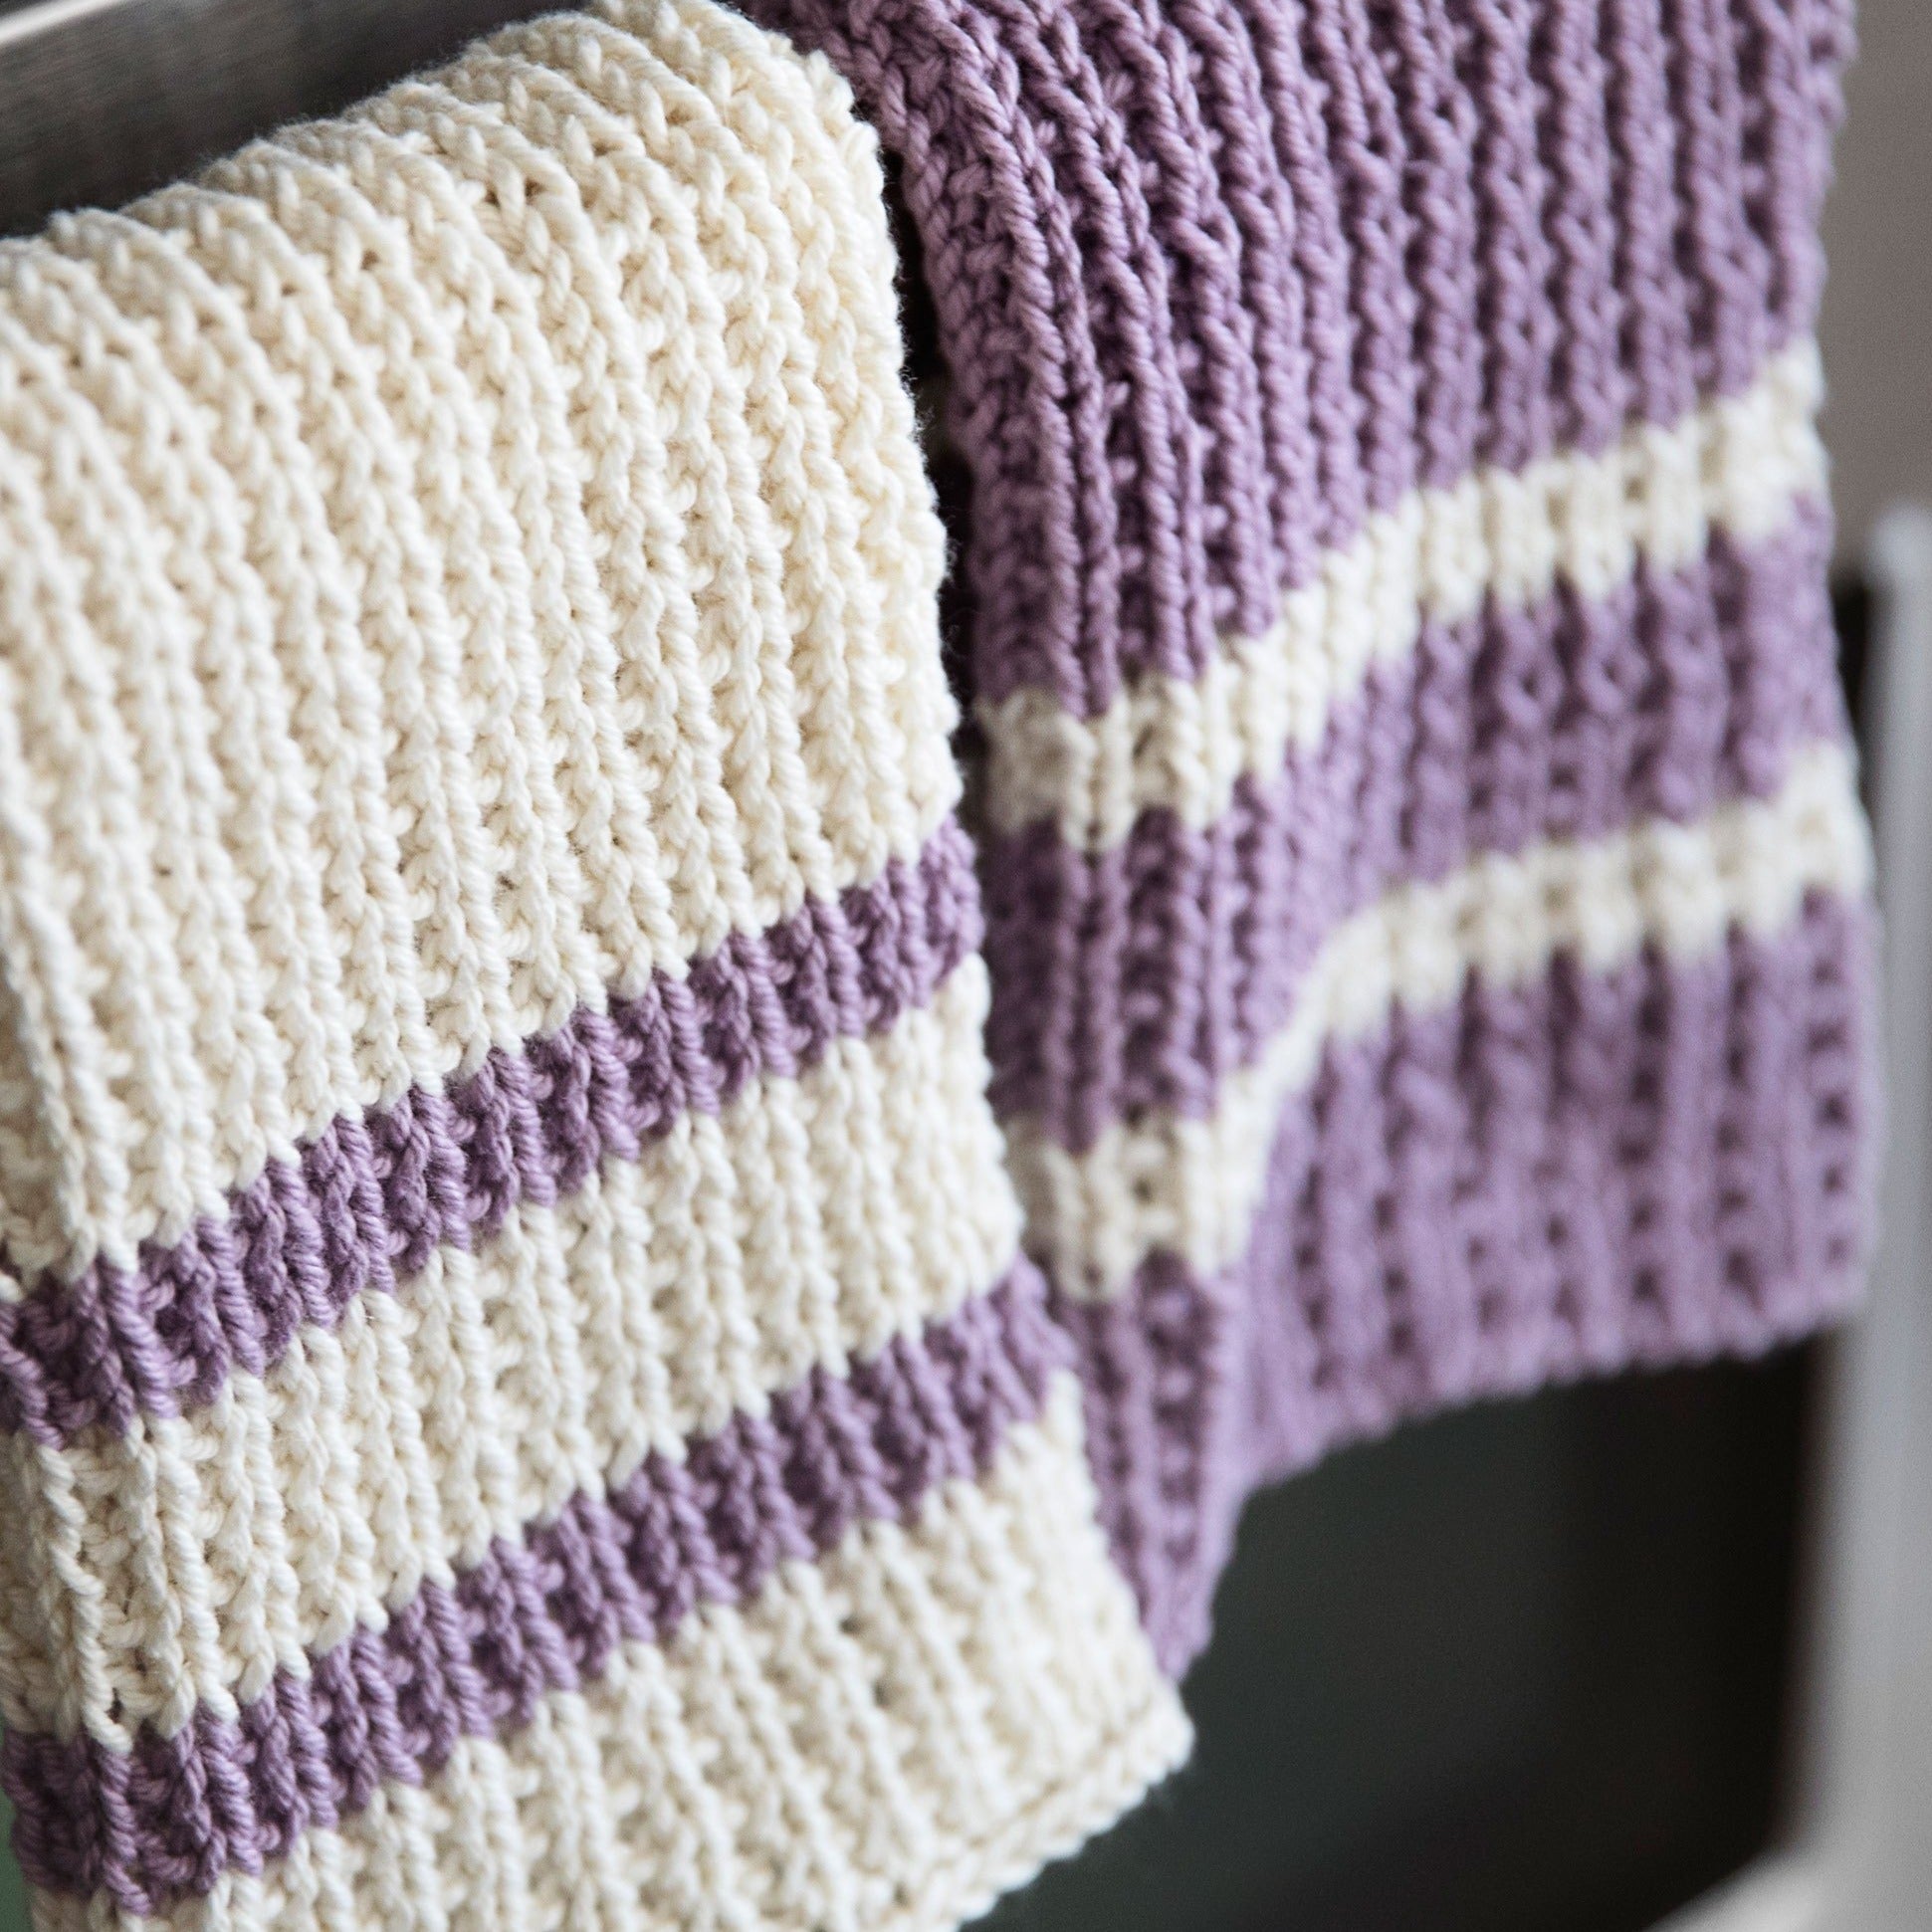 Rustic Dish Towels Knitting Pattern